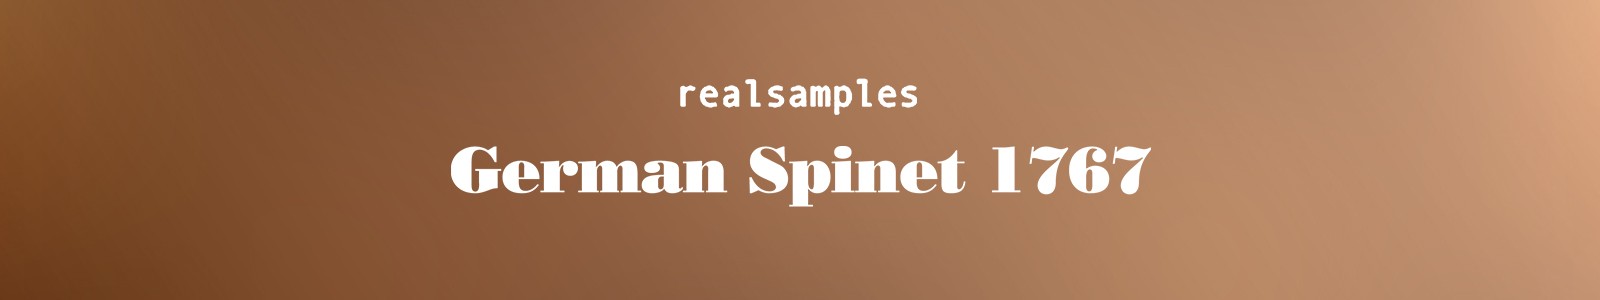 Realsamples German Spinet 1767